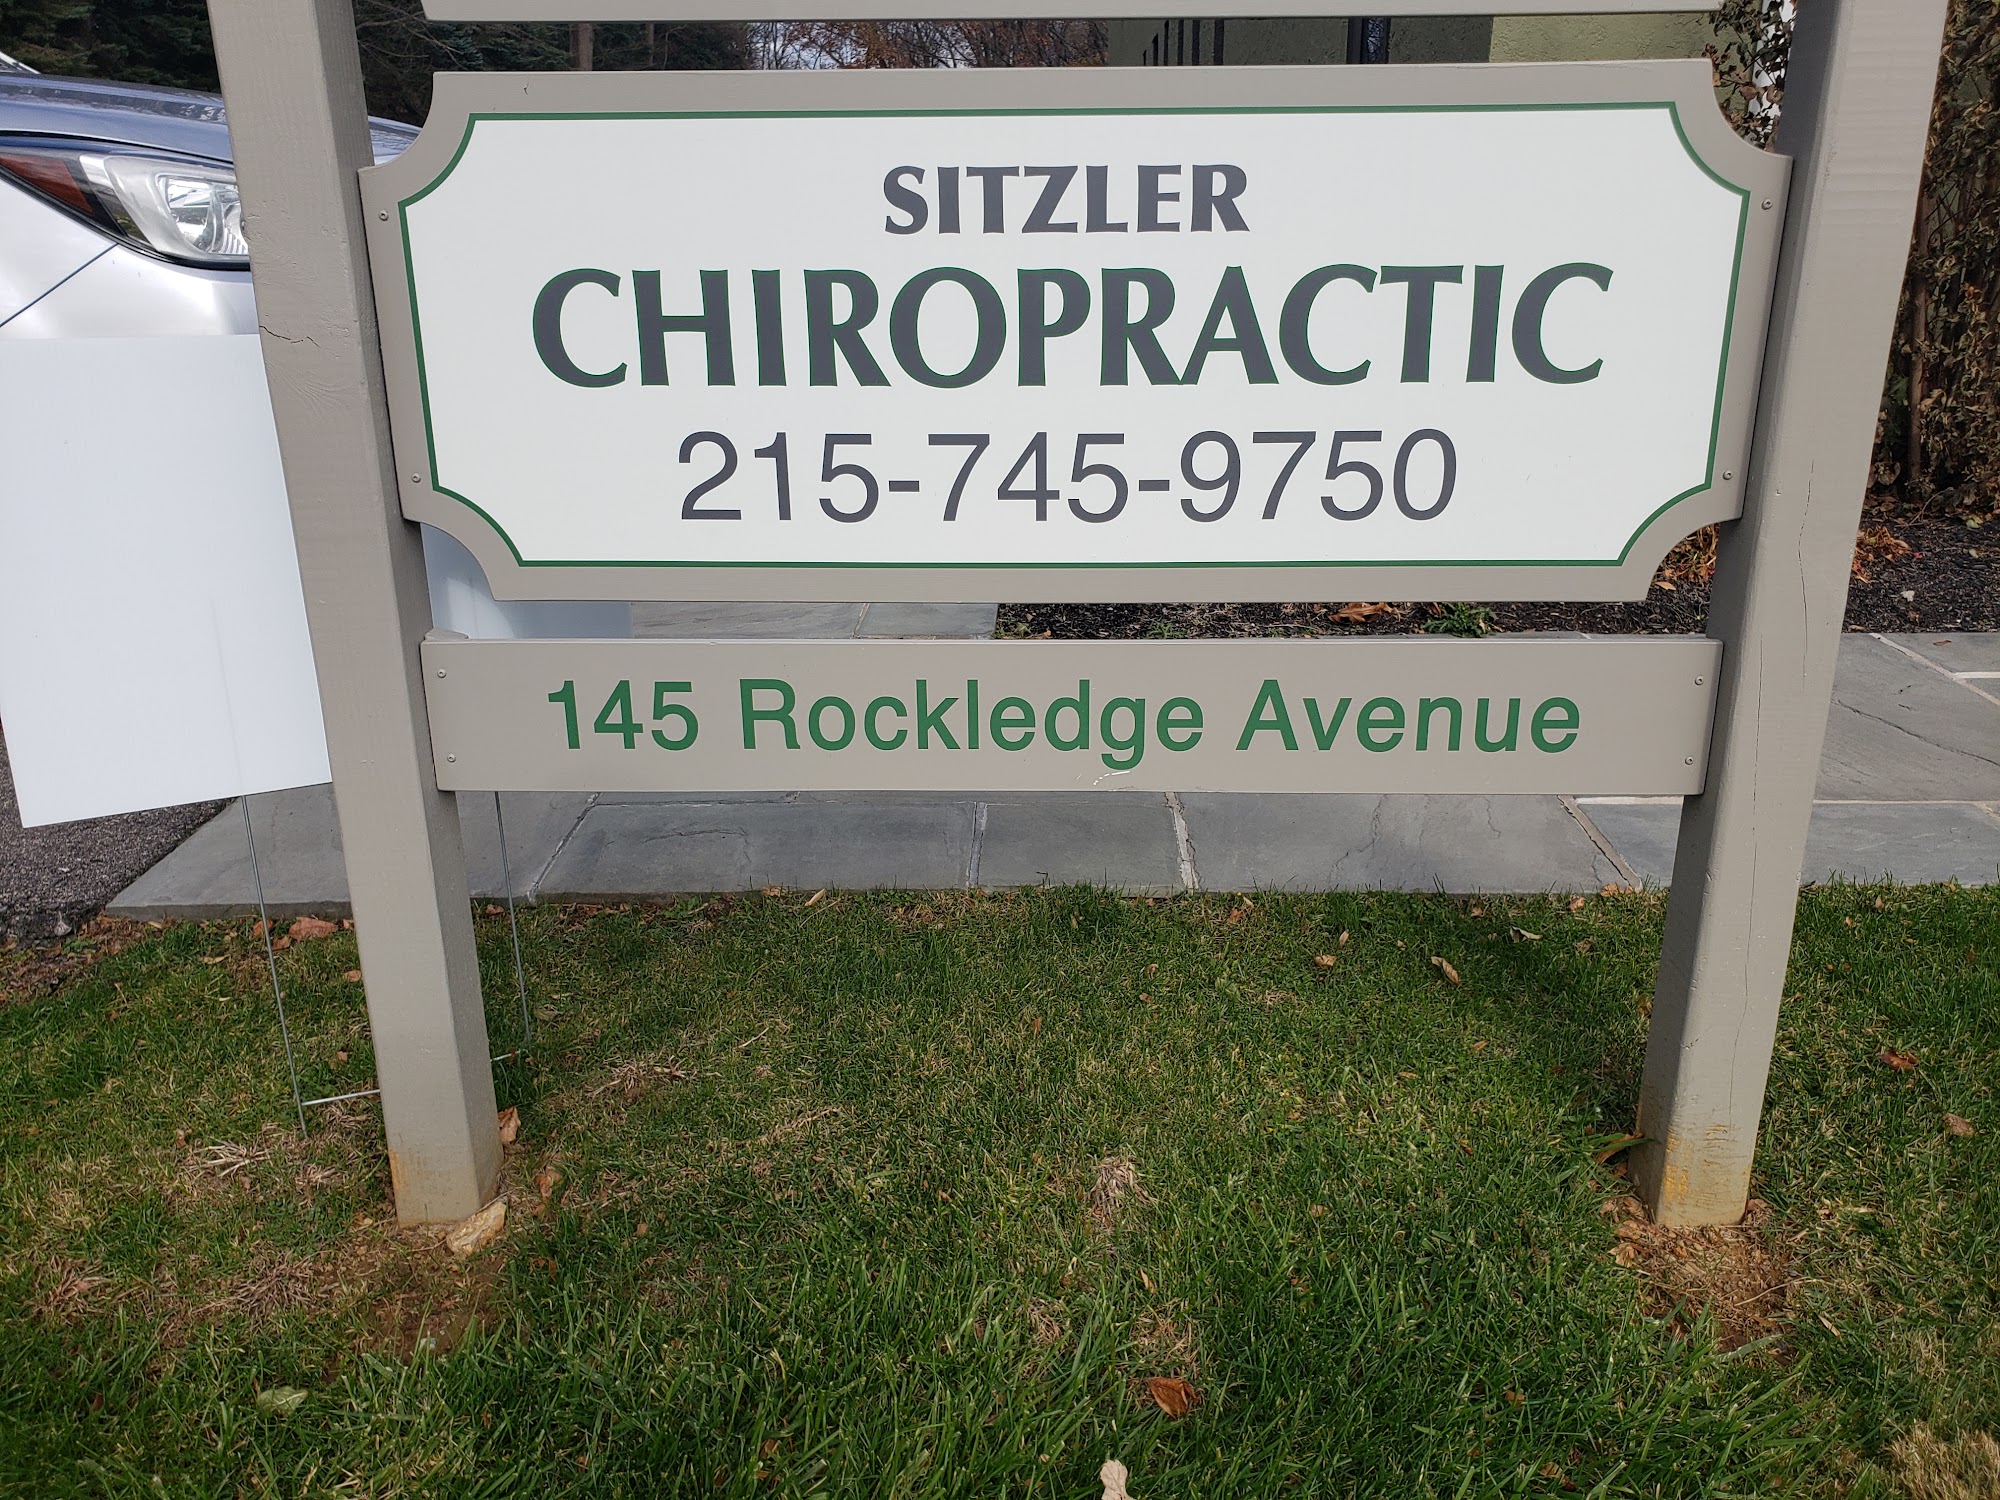 Sitzler Chiropractic 145 Rockledge Ave, Rockledge Pennsylvania 19046